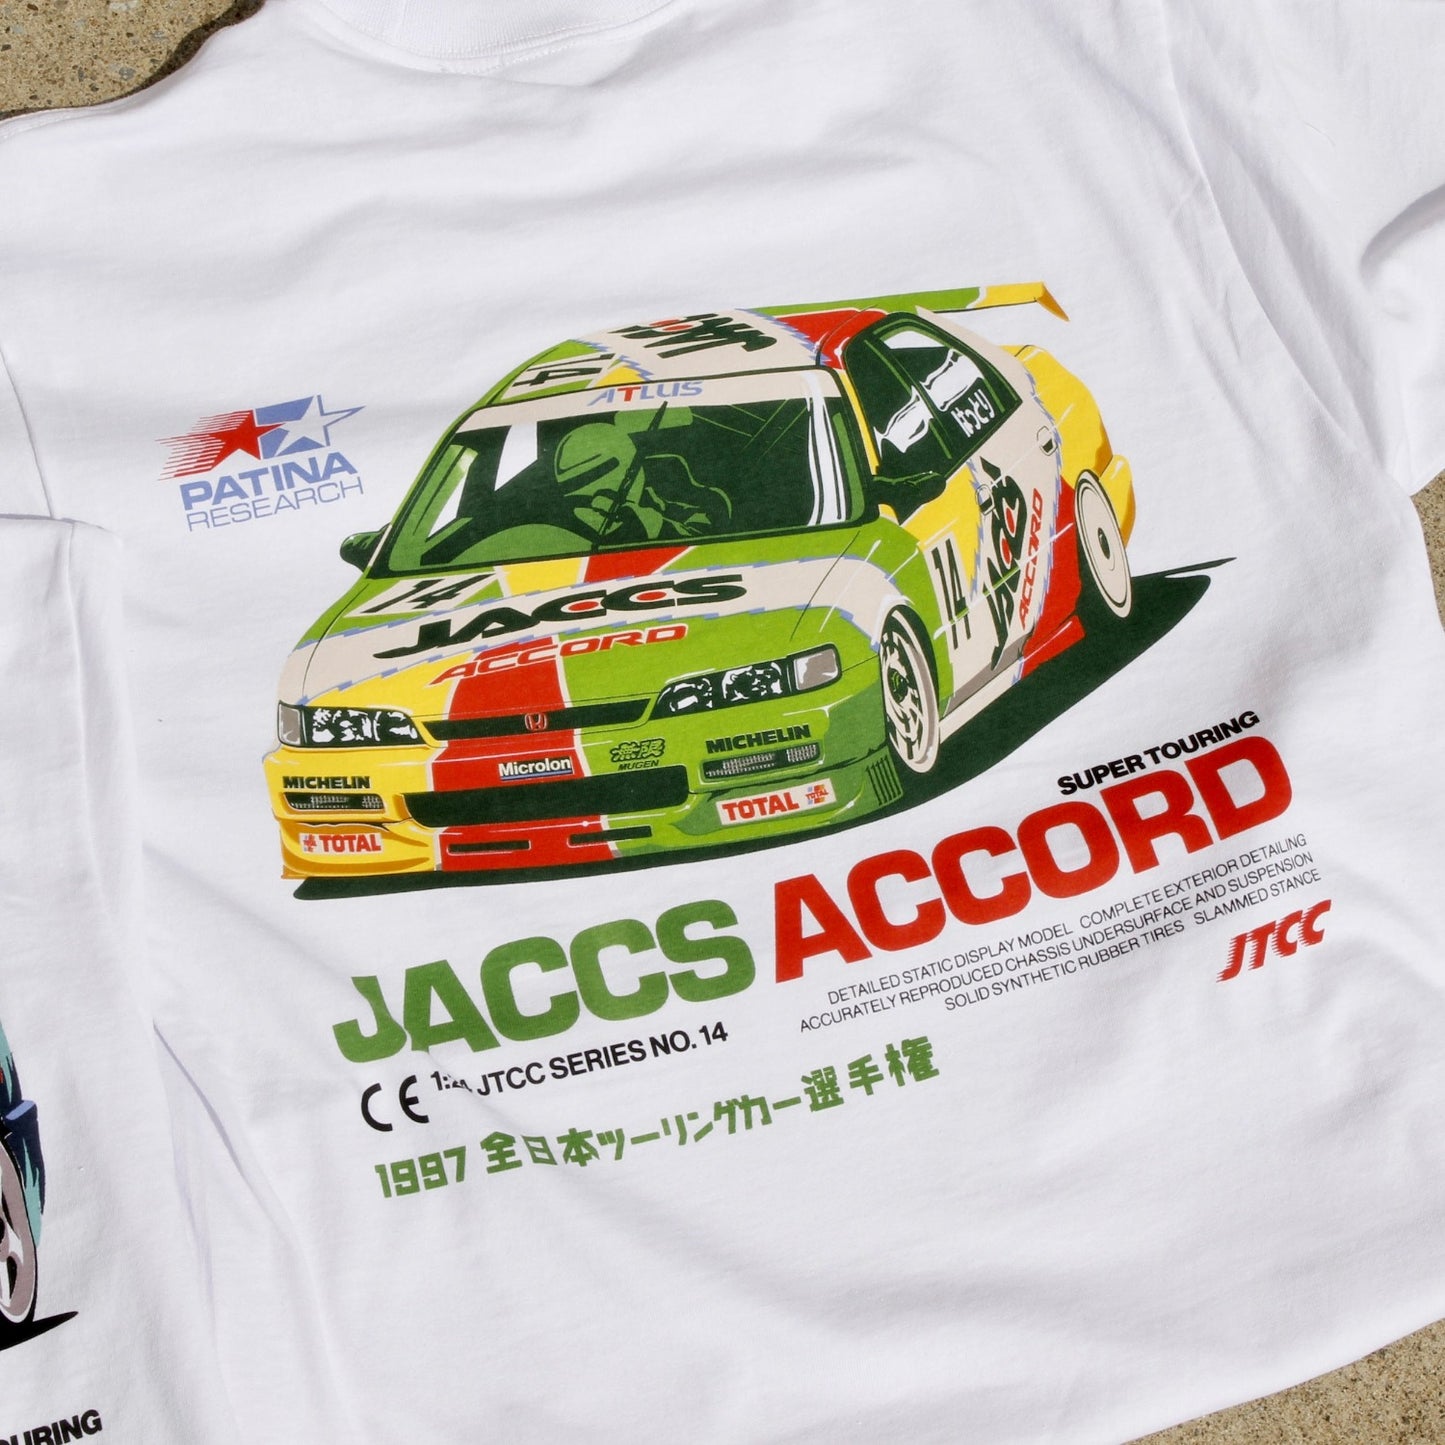 Jtcc Jaccs Accord T-shirt